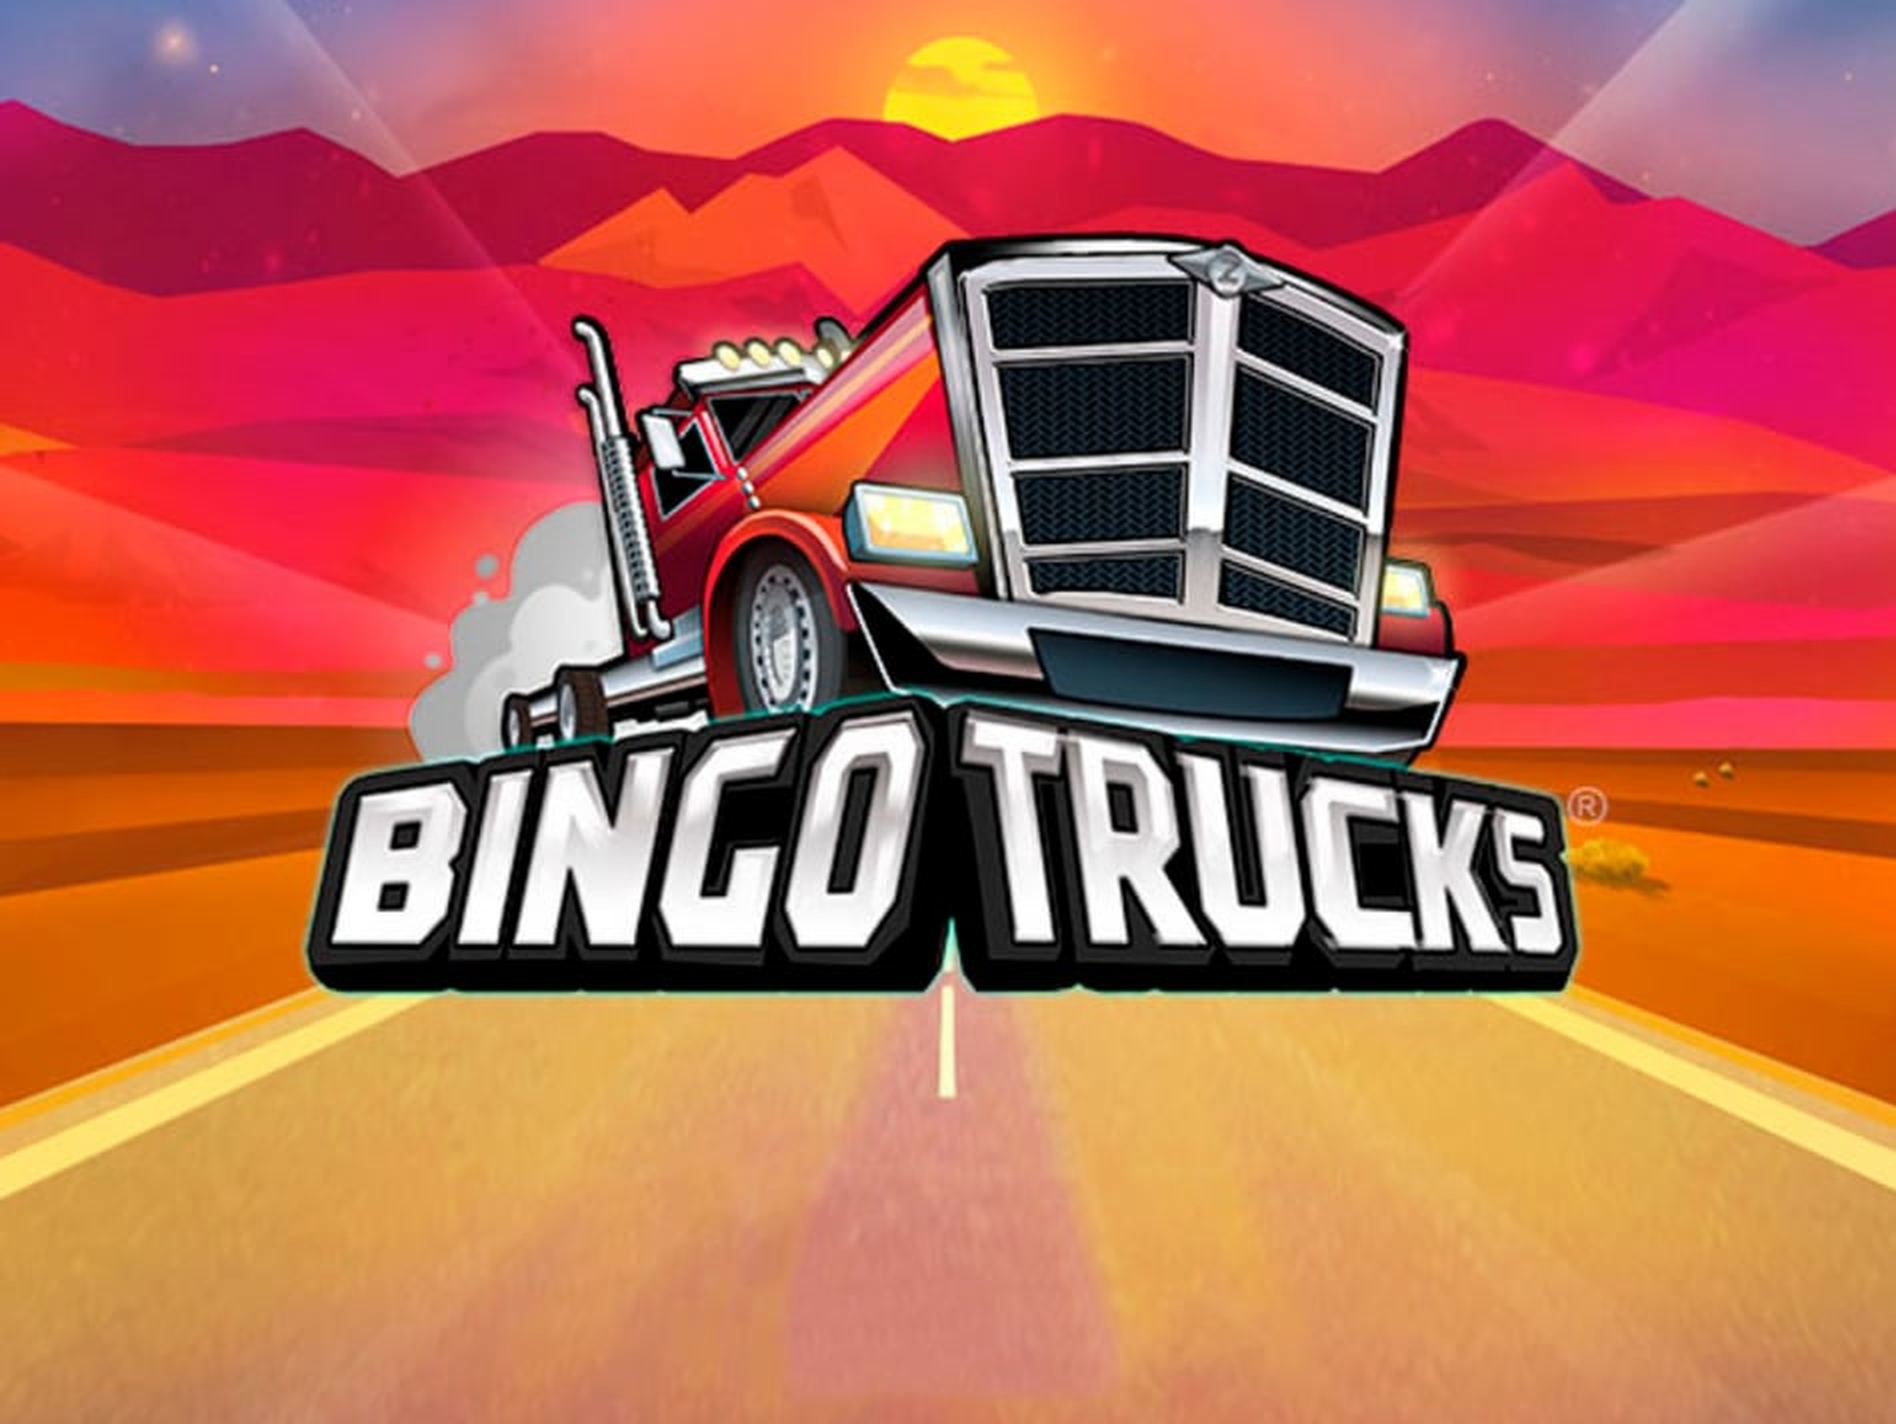 The Bingo Trucks Online Slot Demo Game by Zitro